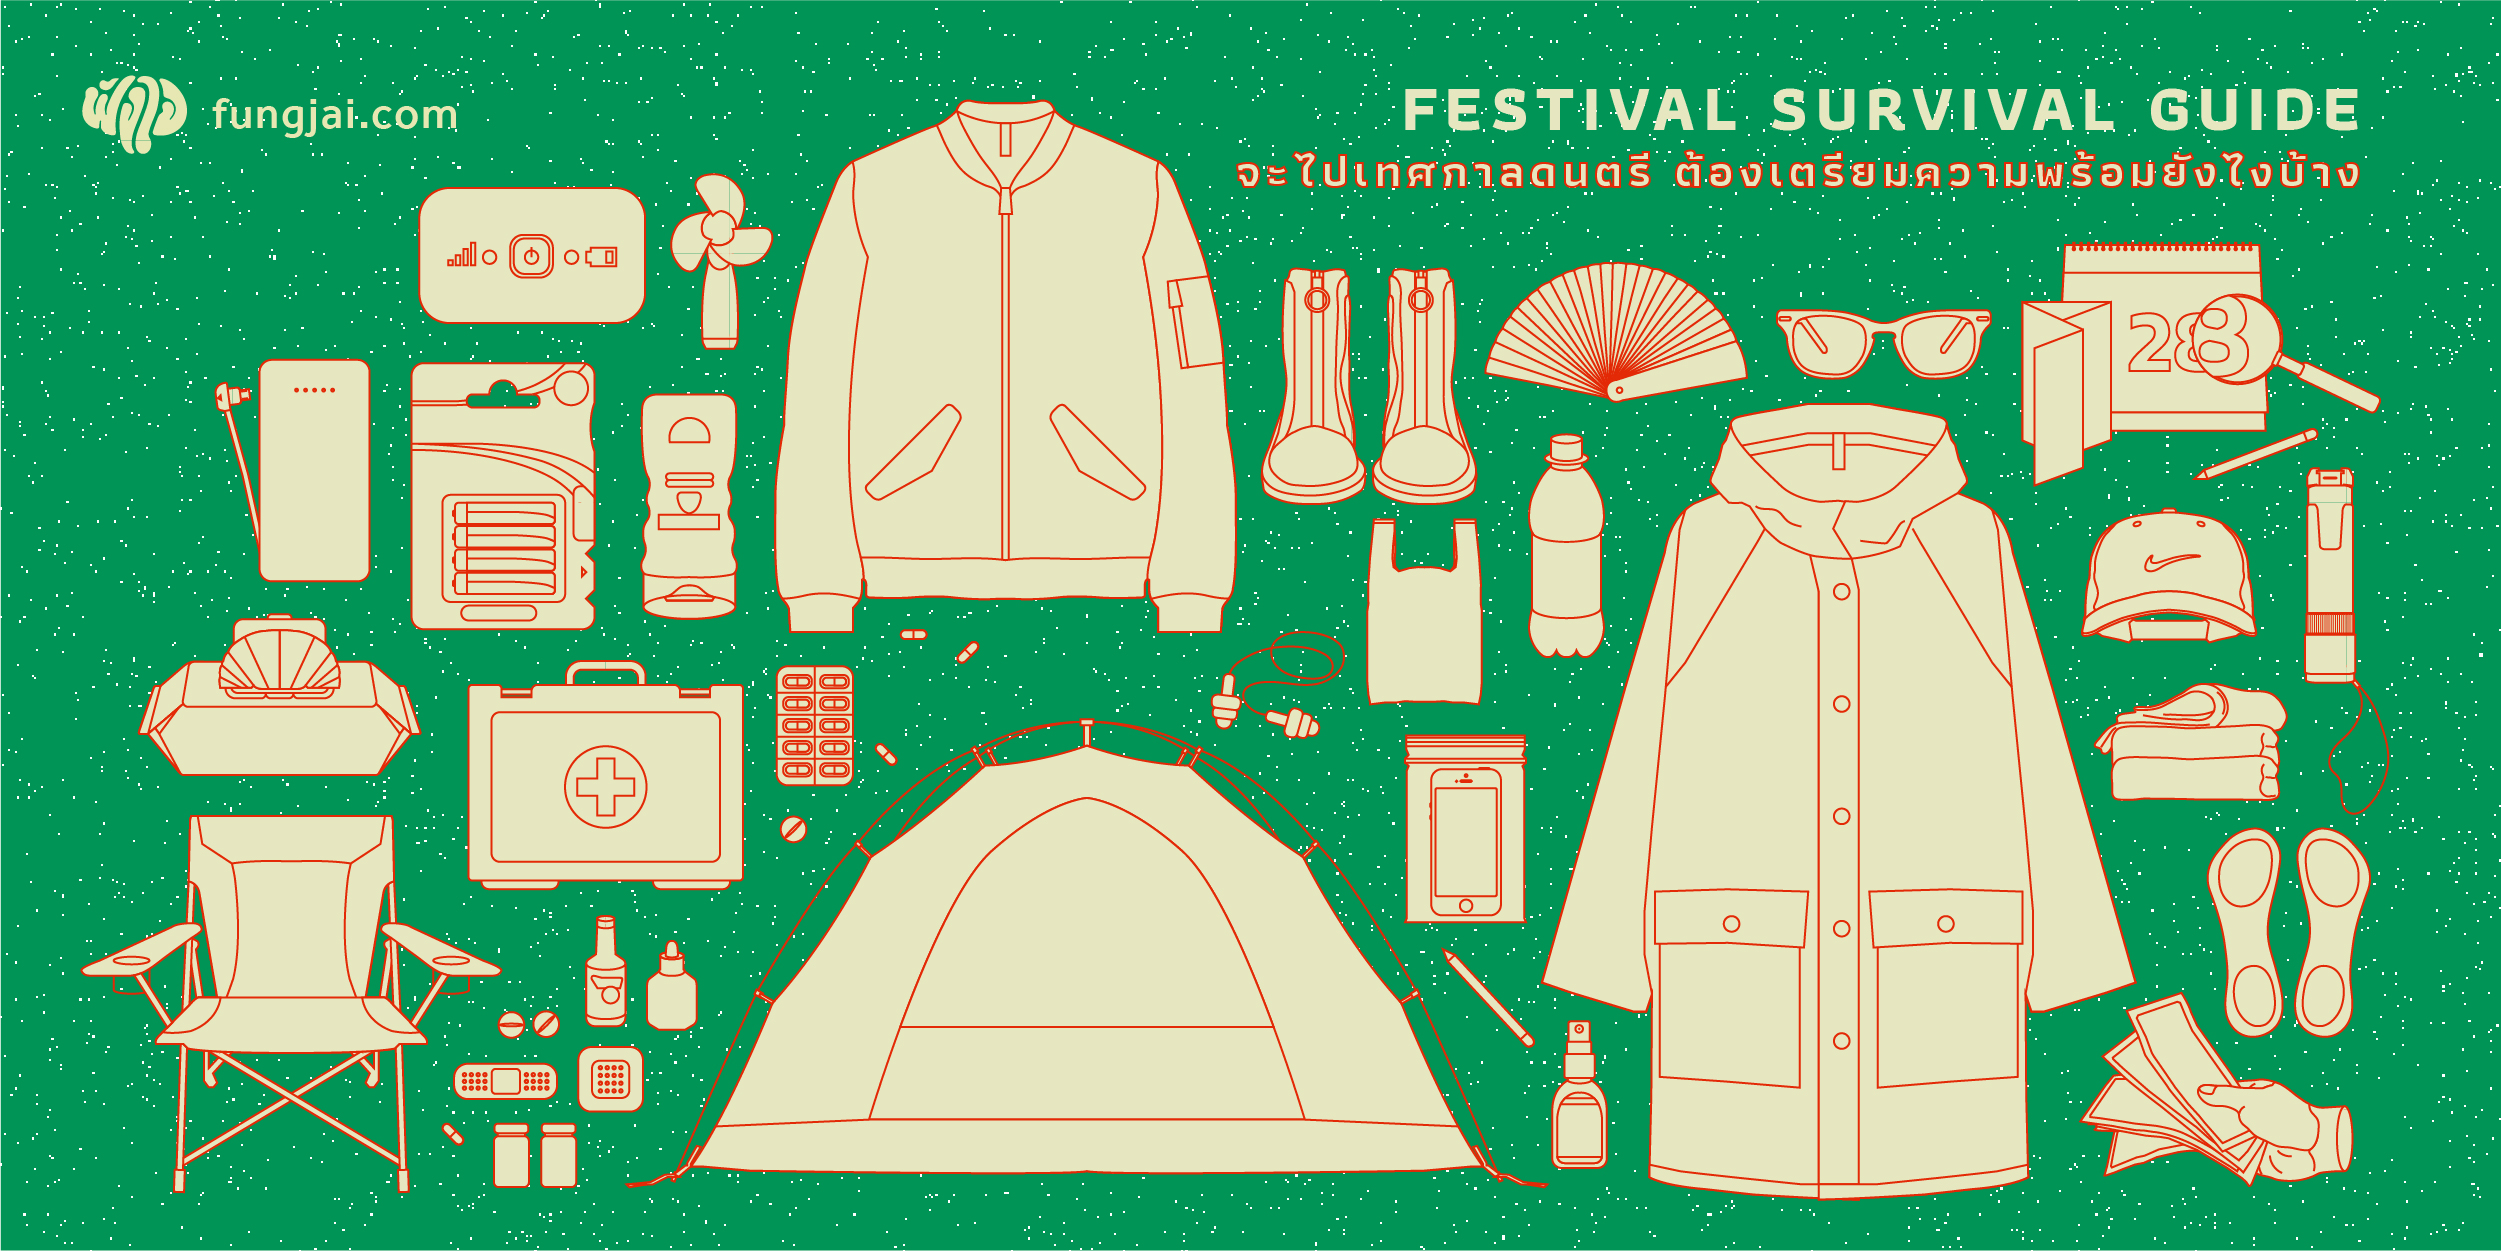 Festival Survival Guide จะไปเทศกาลดนตรี ต้องเตรียมความพร้อมยังไงบ้าง